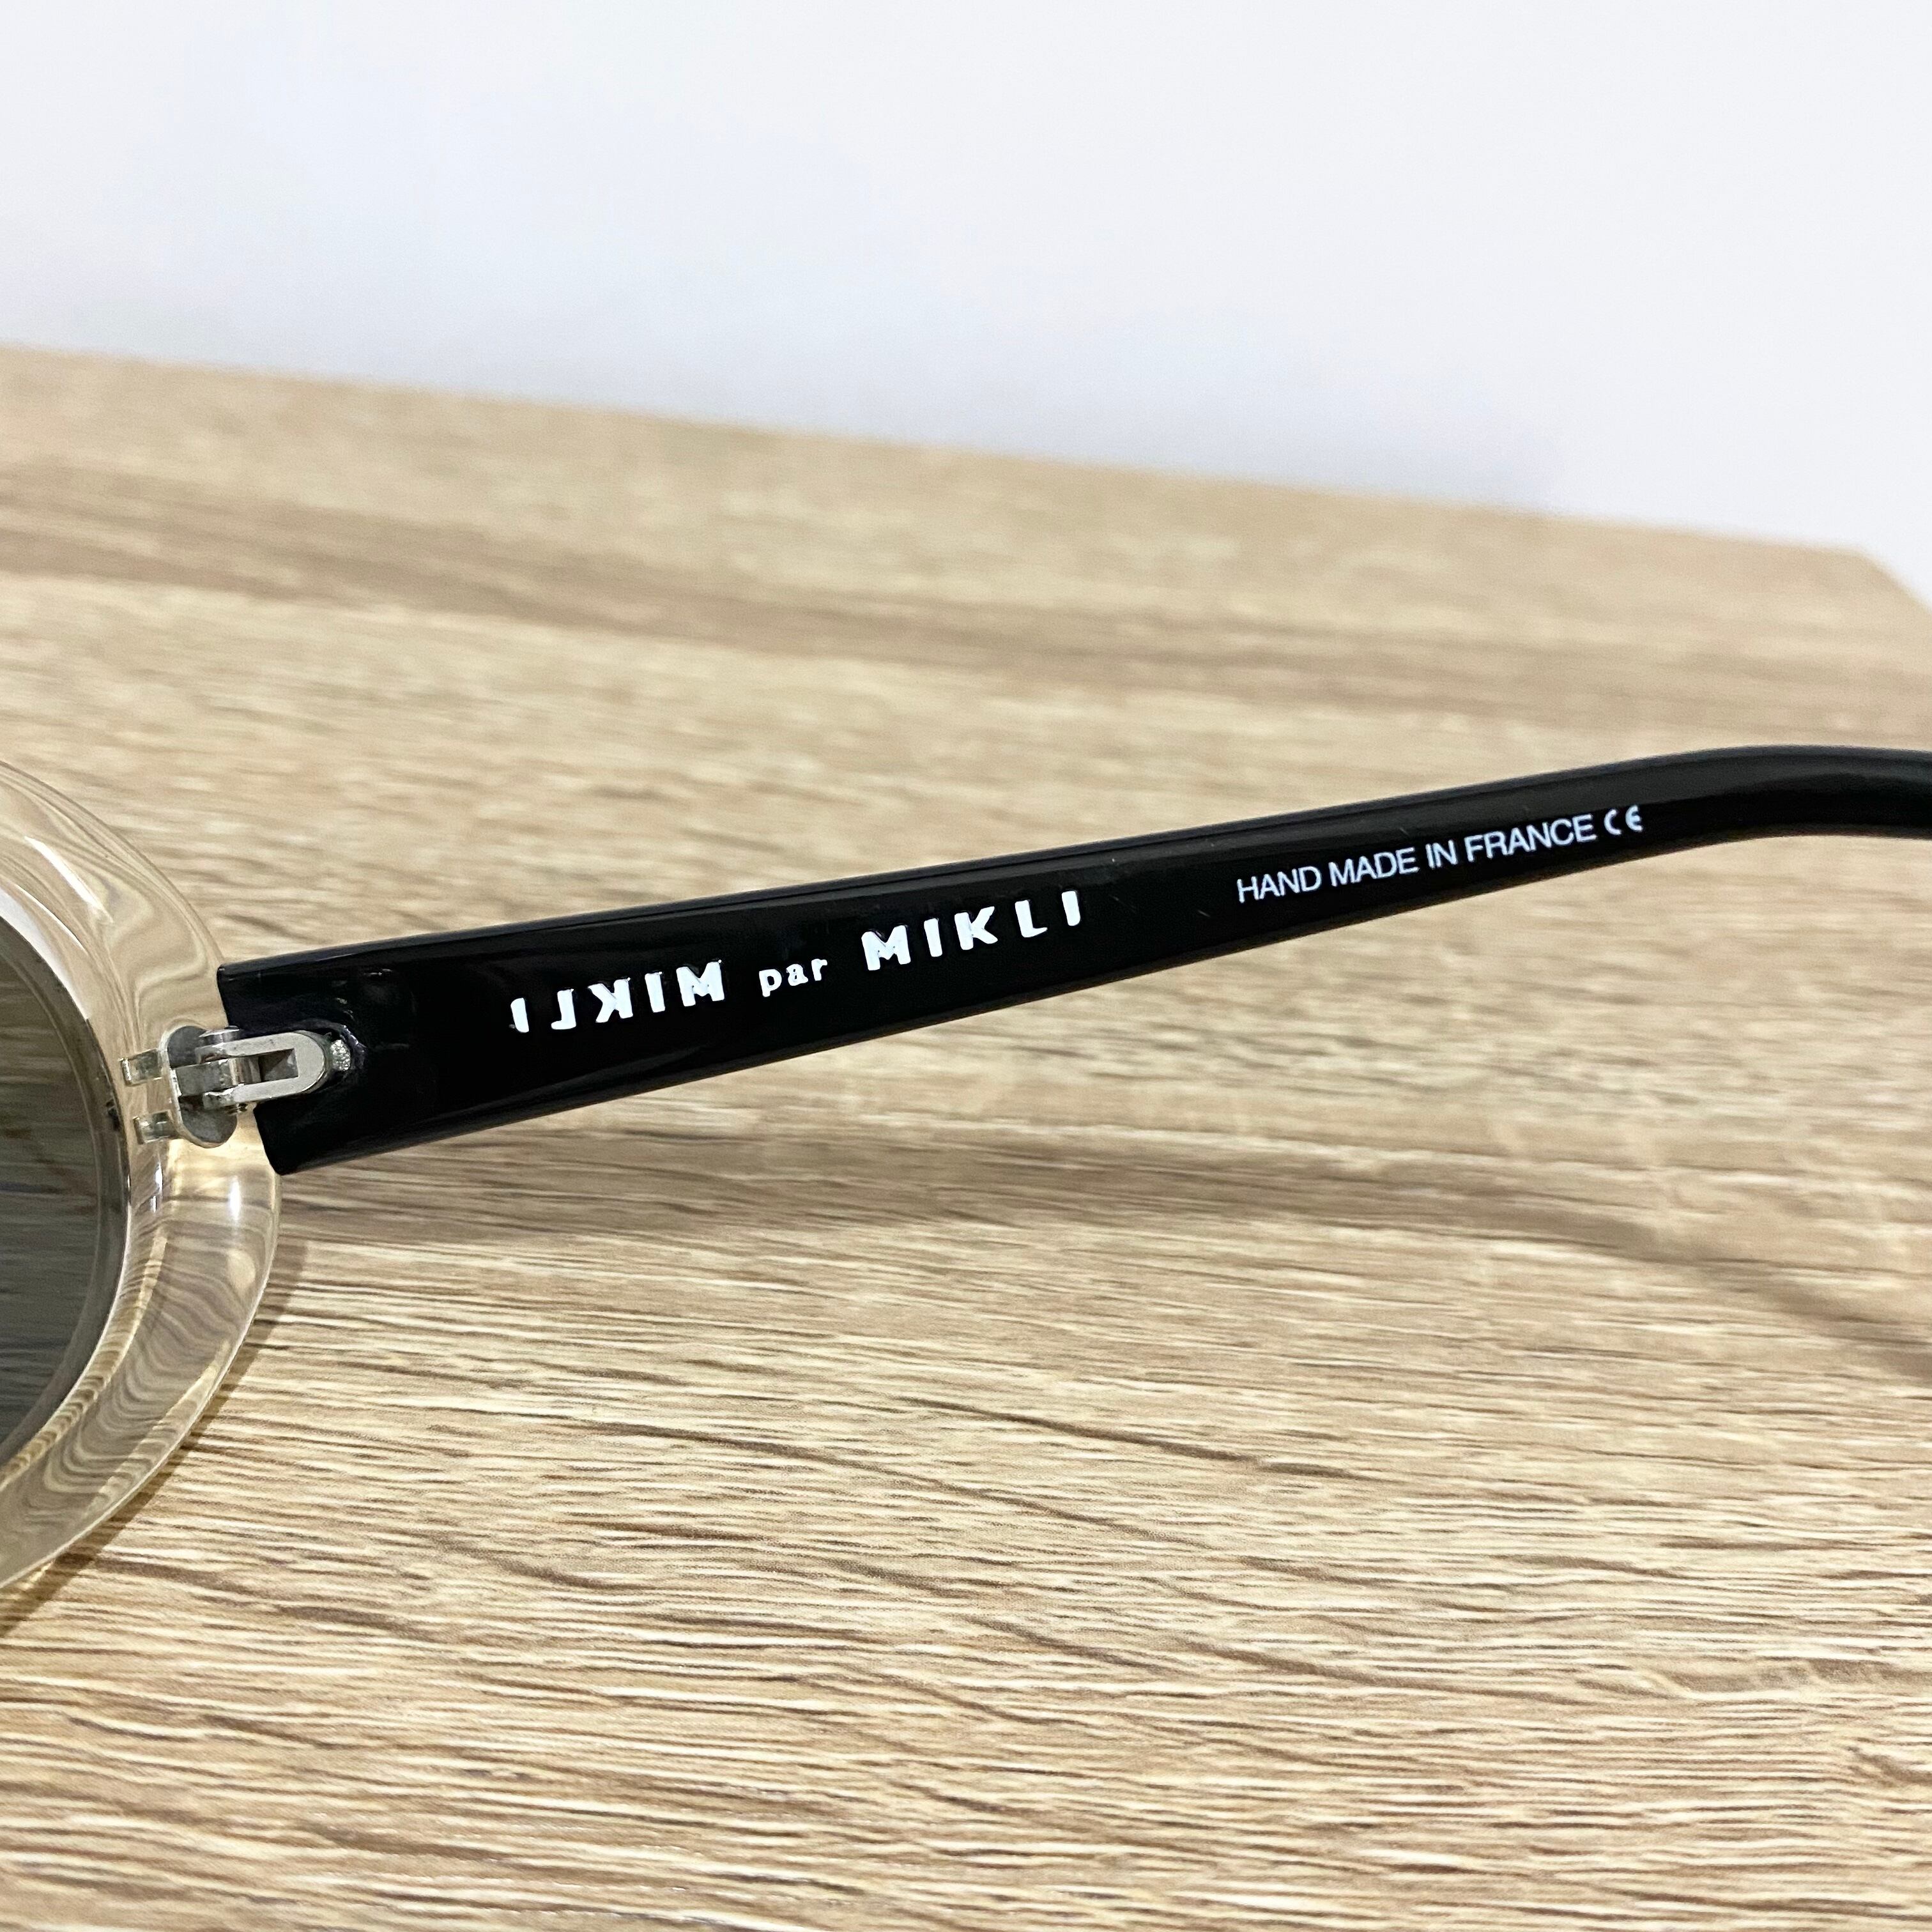 MIKLI par MIKLI Oval Sunglasses Clear Black Made in France 00s 90s 